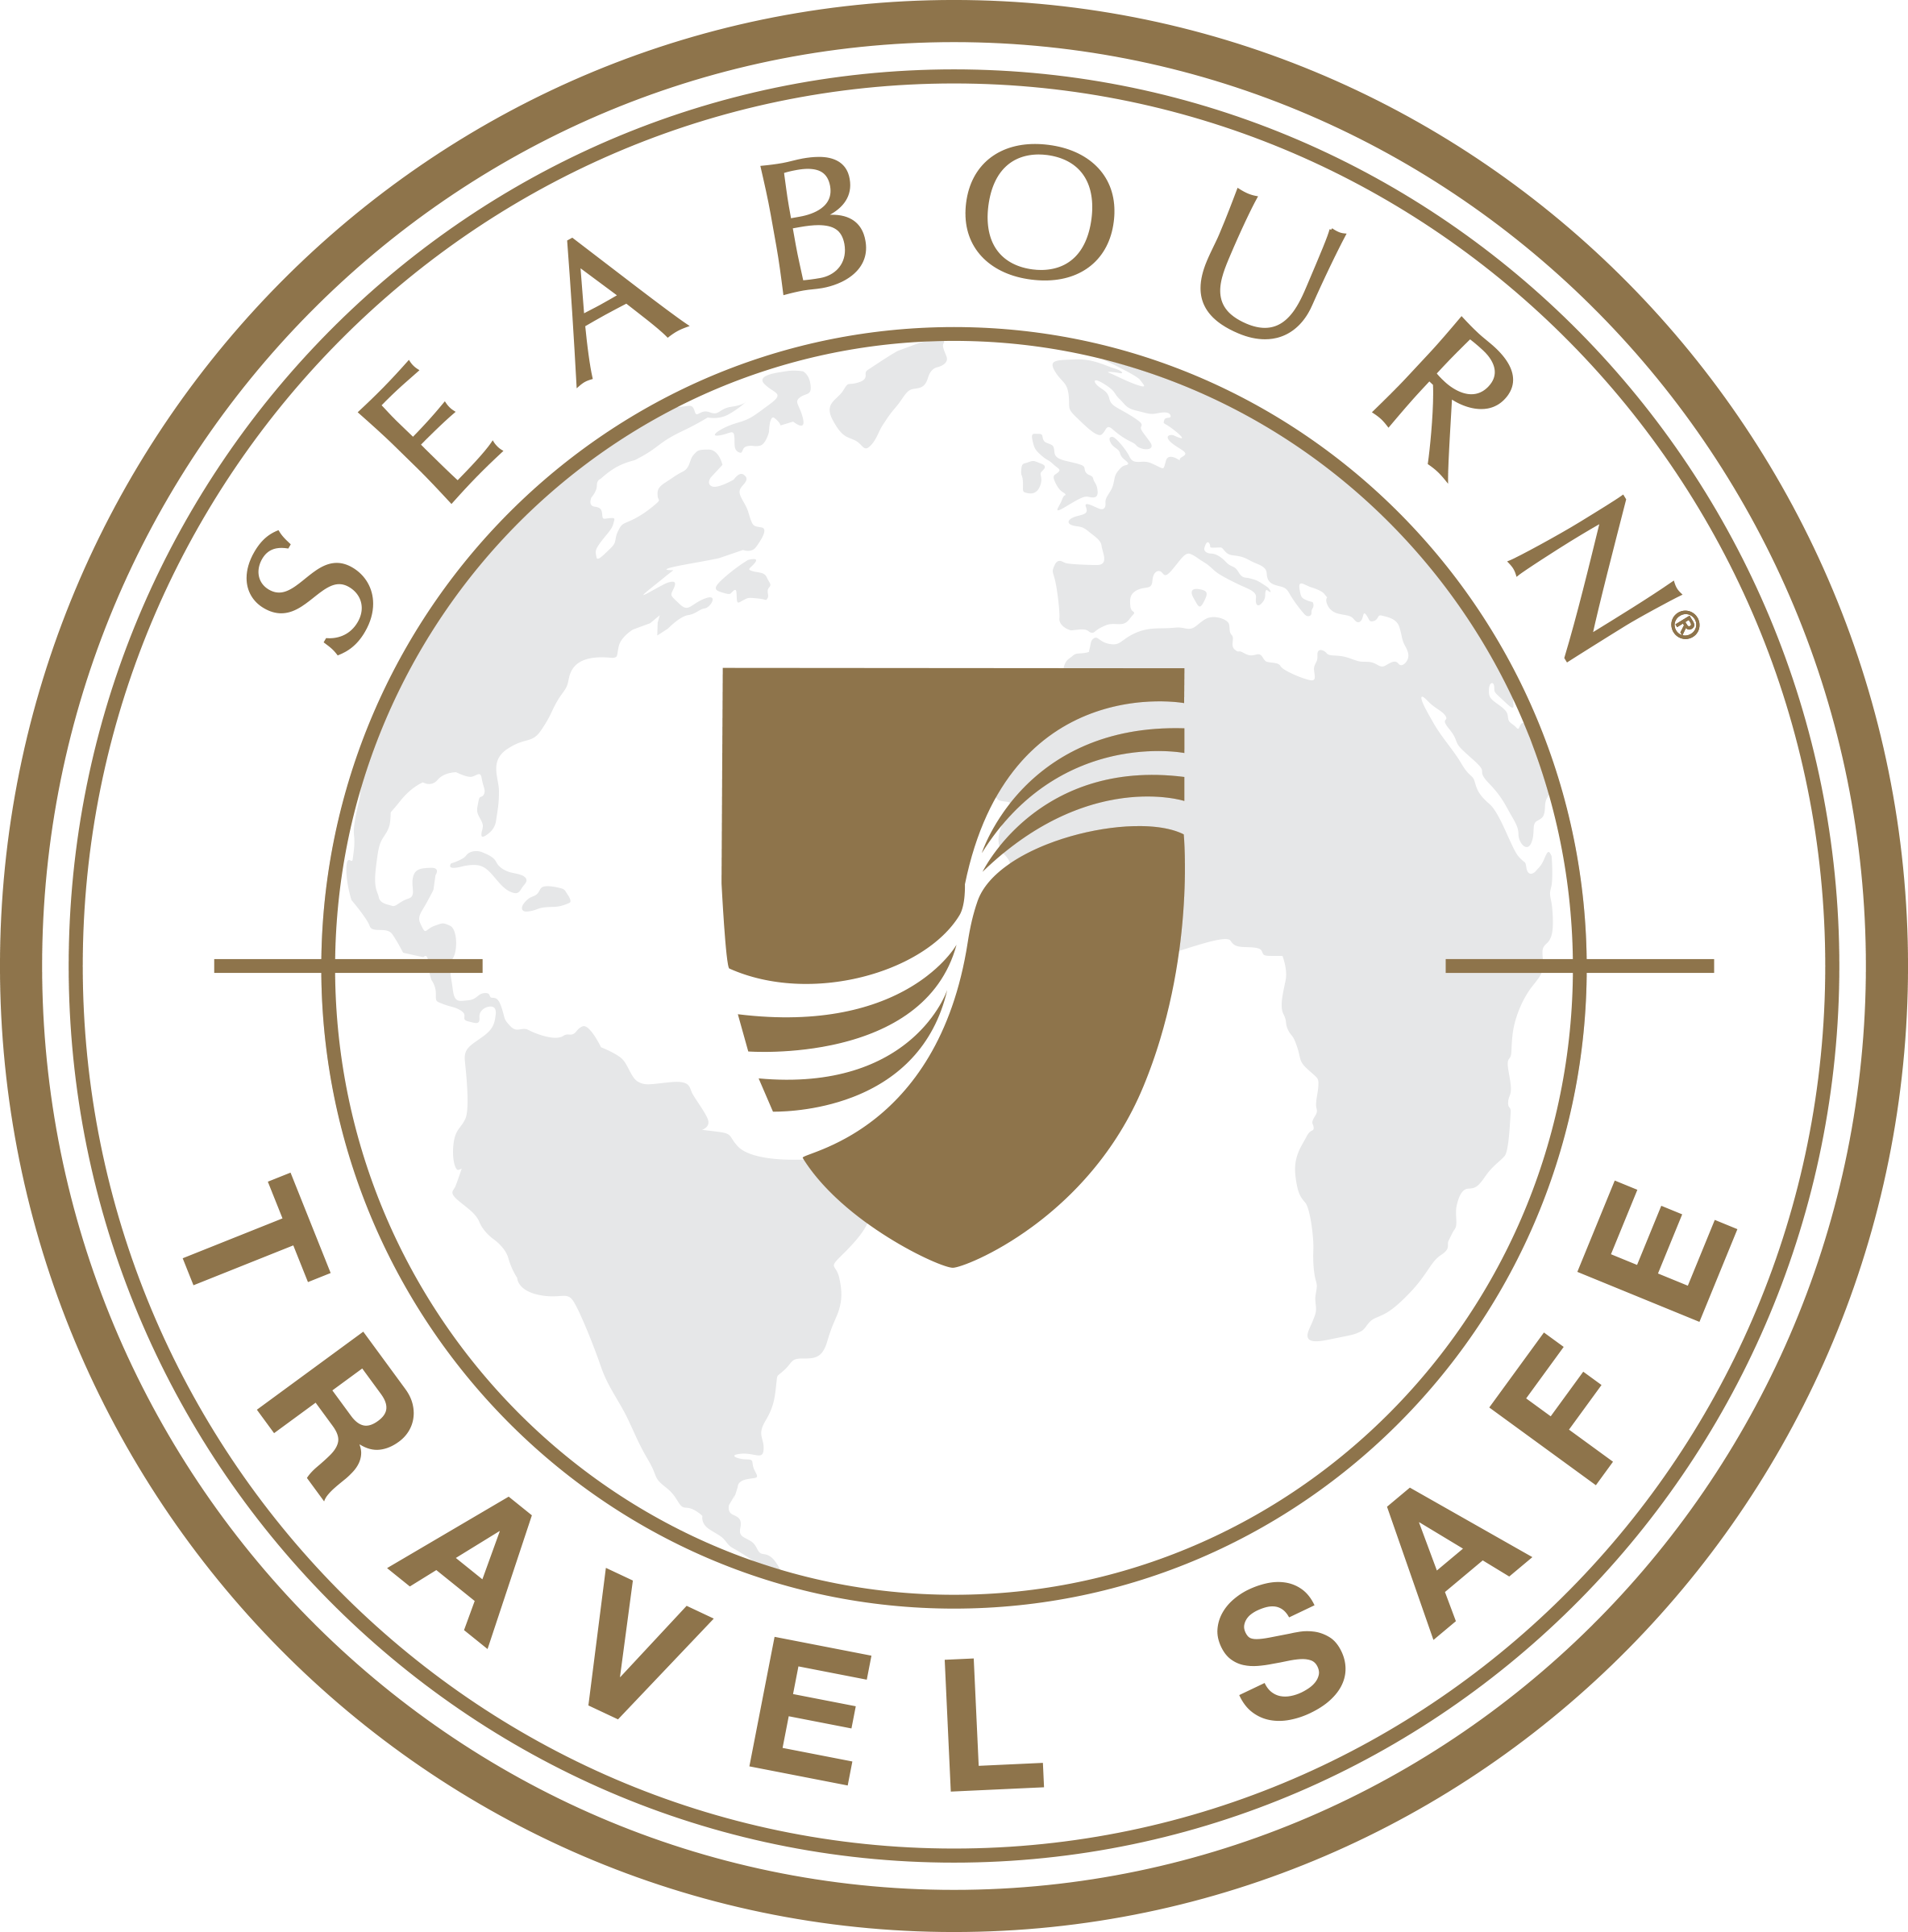 Seabourn Travel Safe seal